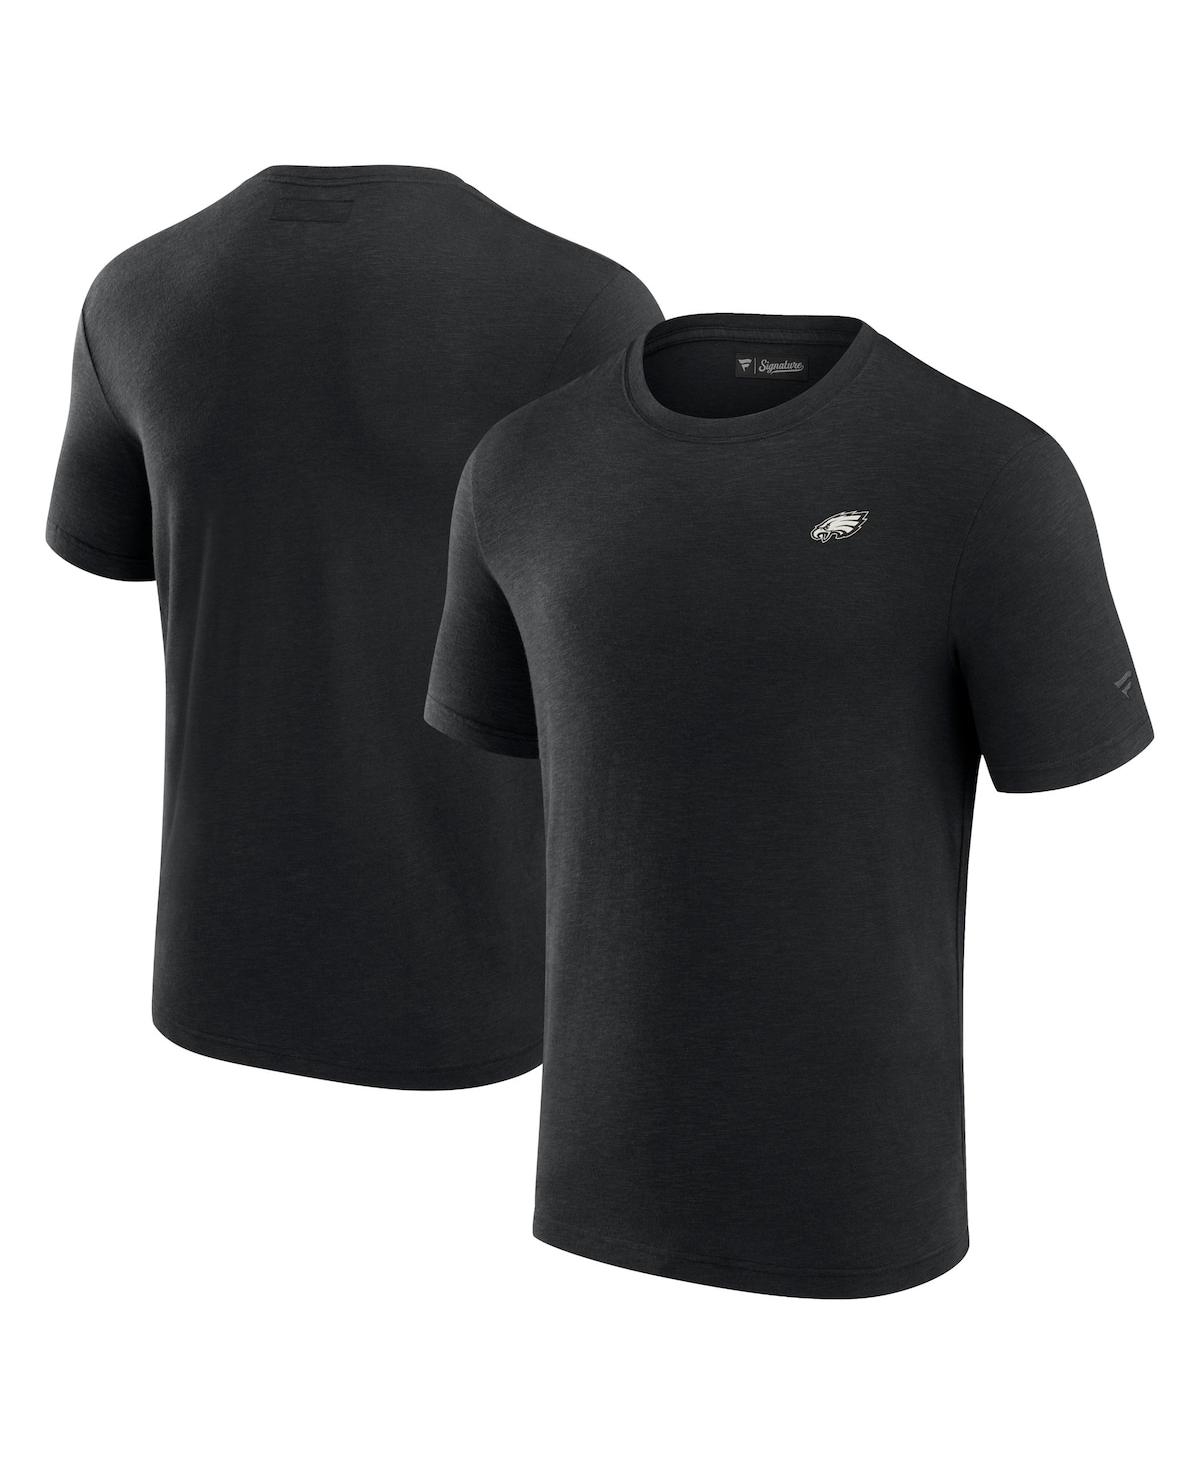 Men's Fanatics Signature Black Philadelphia Eagles Modal Short Sleeve T-shirt - Black